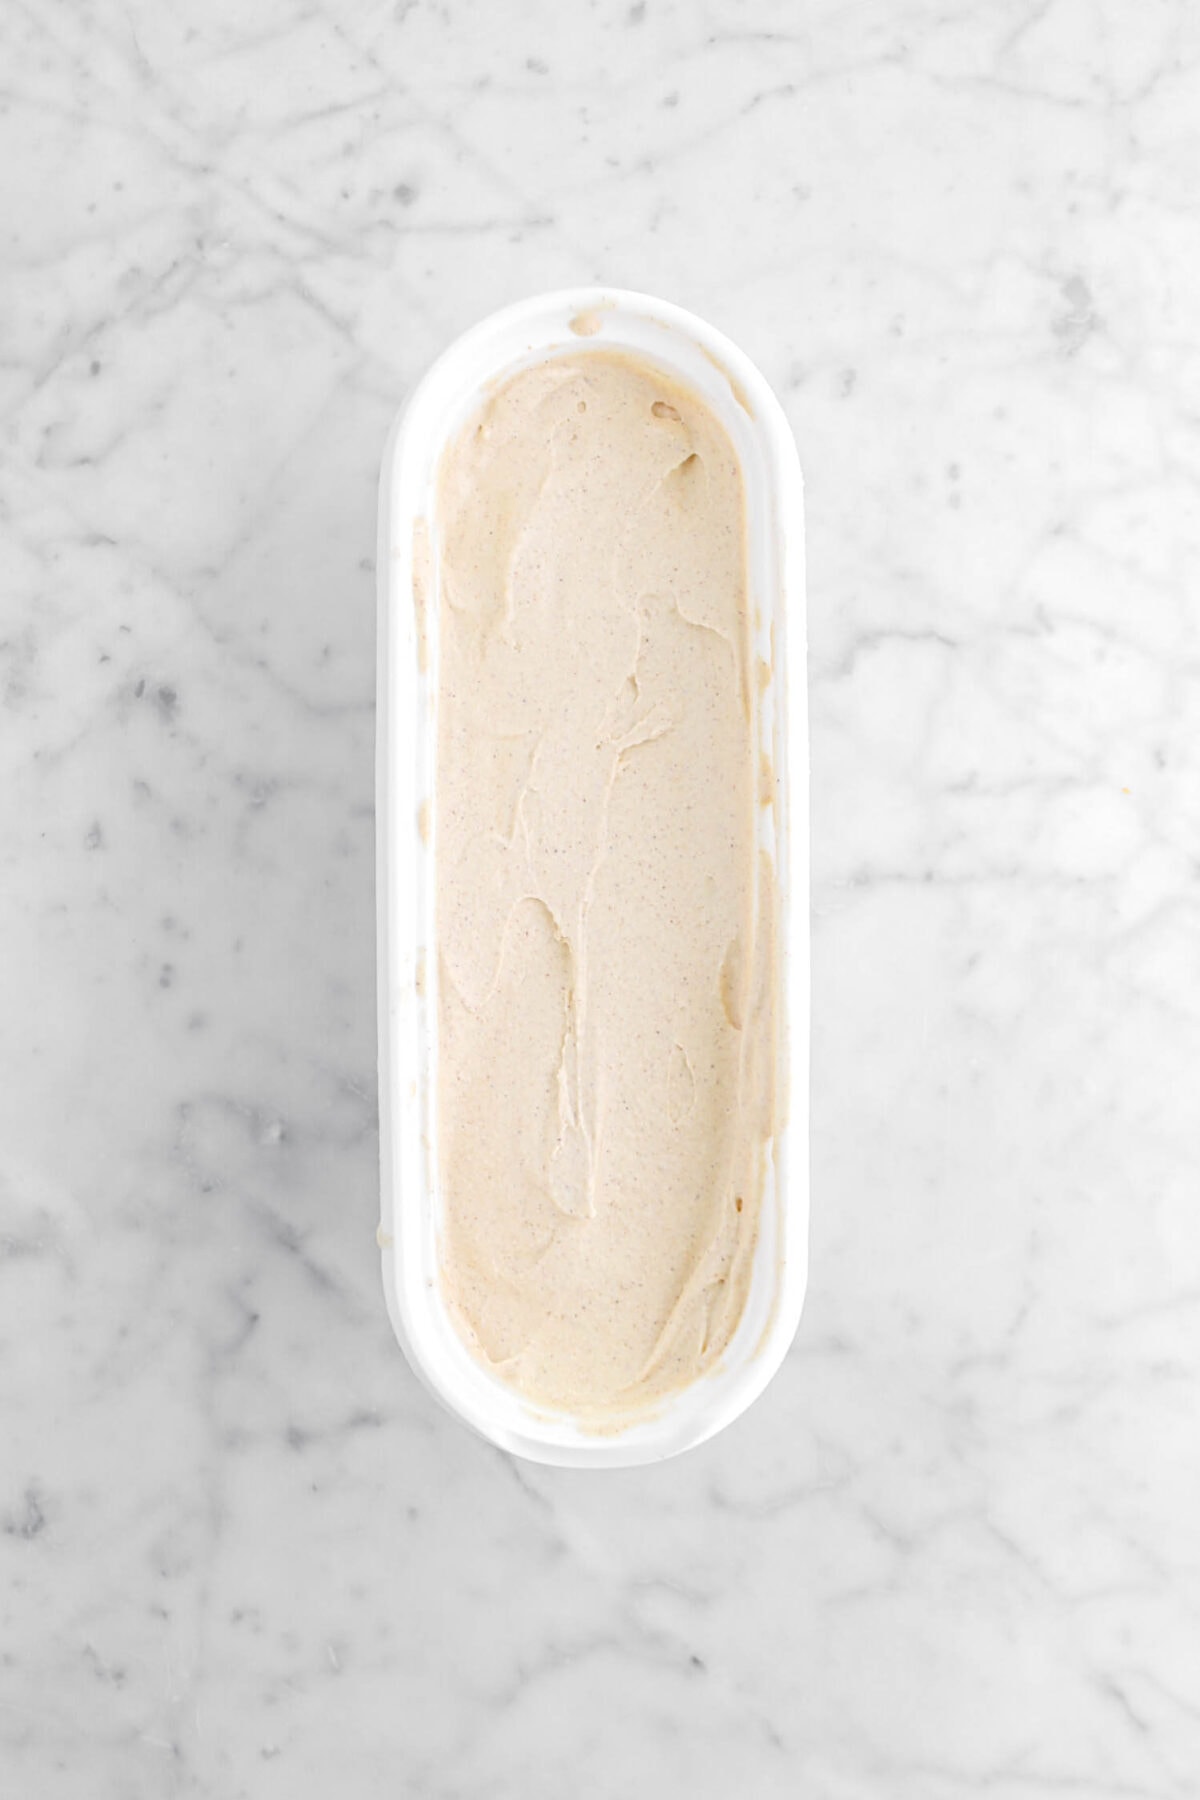 cinnamon ice cream in ice cream container on marble counter.